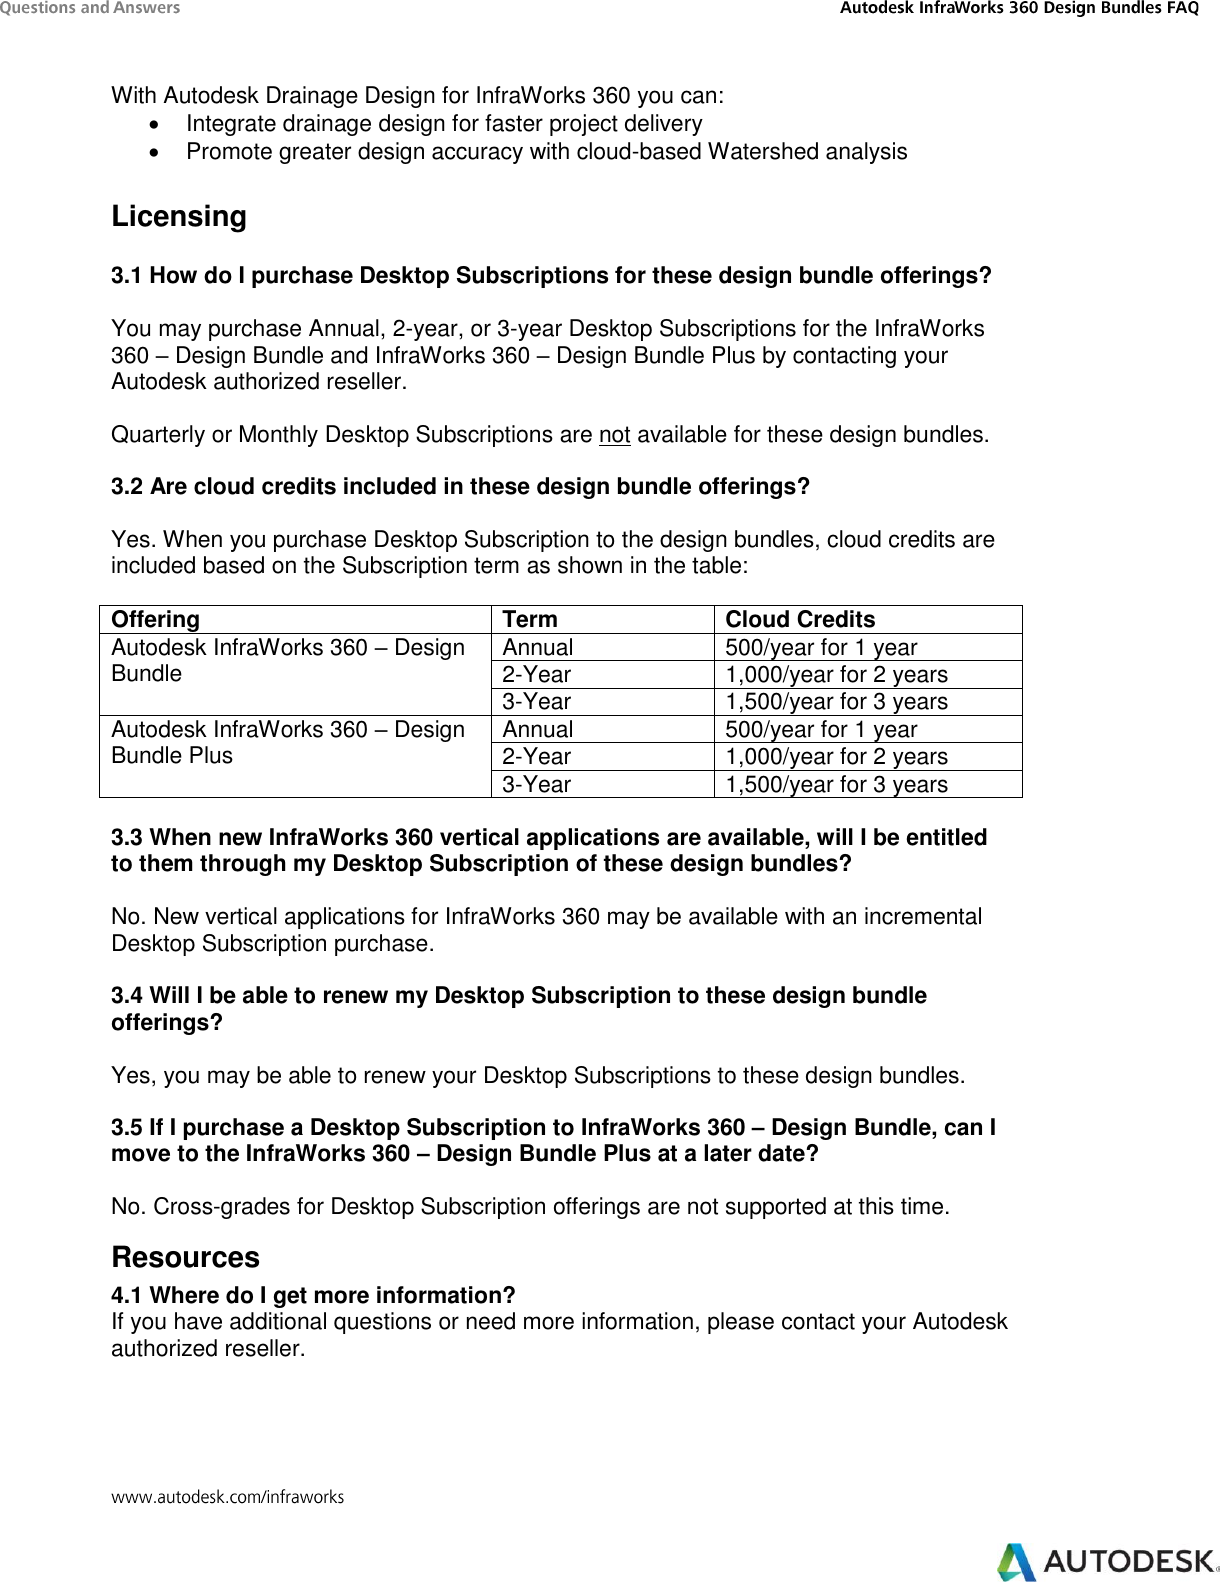 Page 4 of 5 - Infraworks 360 Design Bundles FAQ